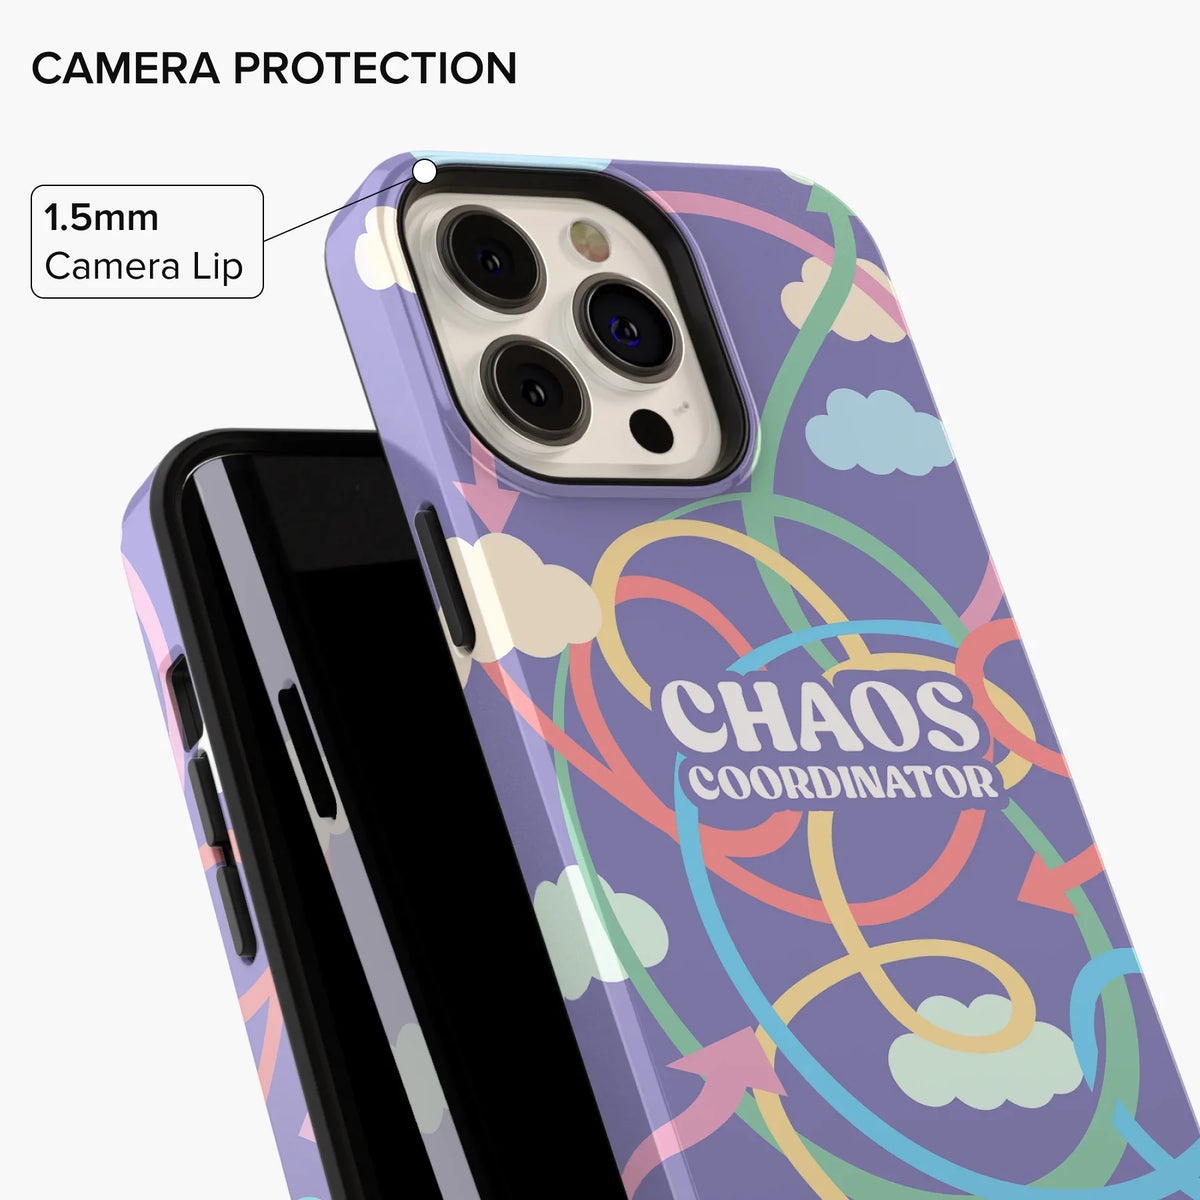 Chaos Coordinator iPhone Case - iPhone 14 Pro